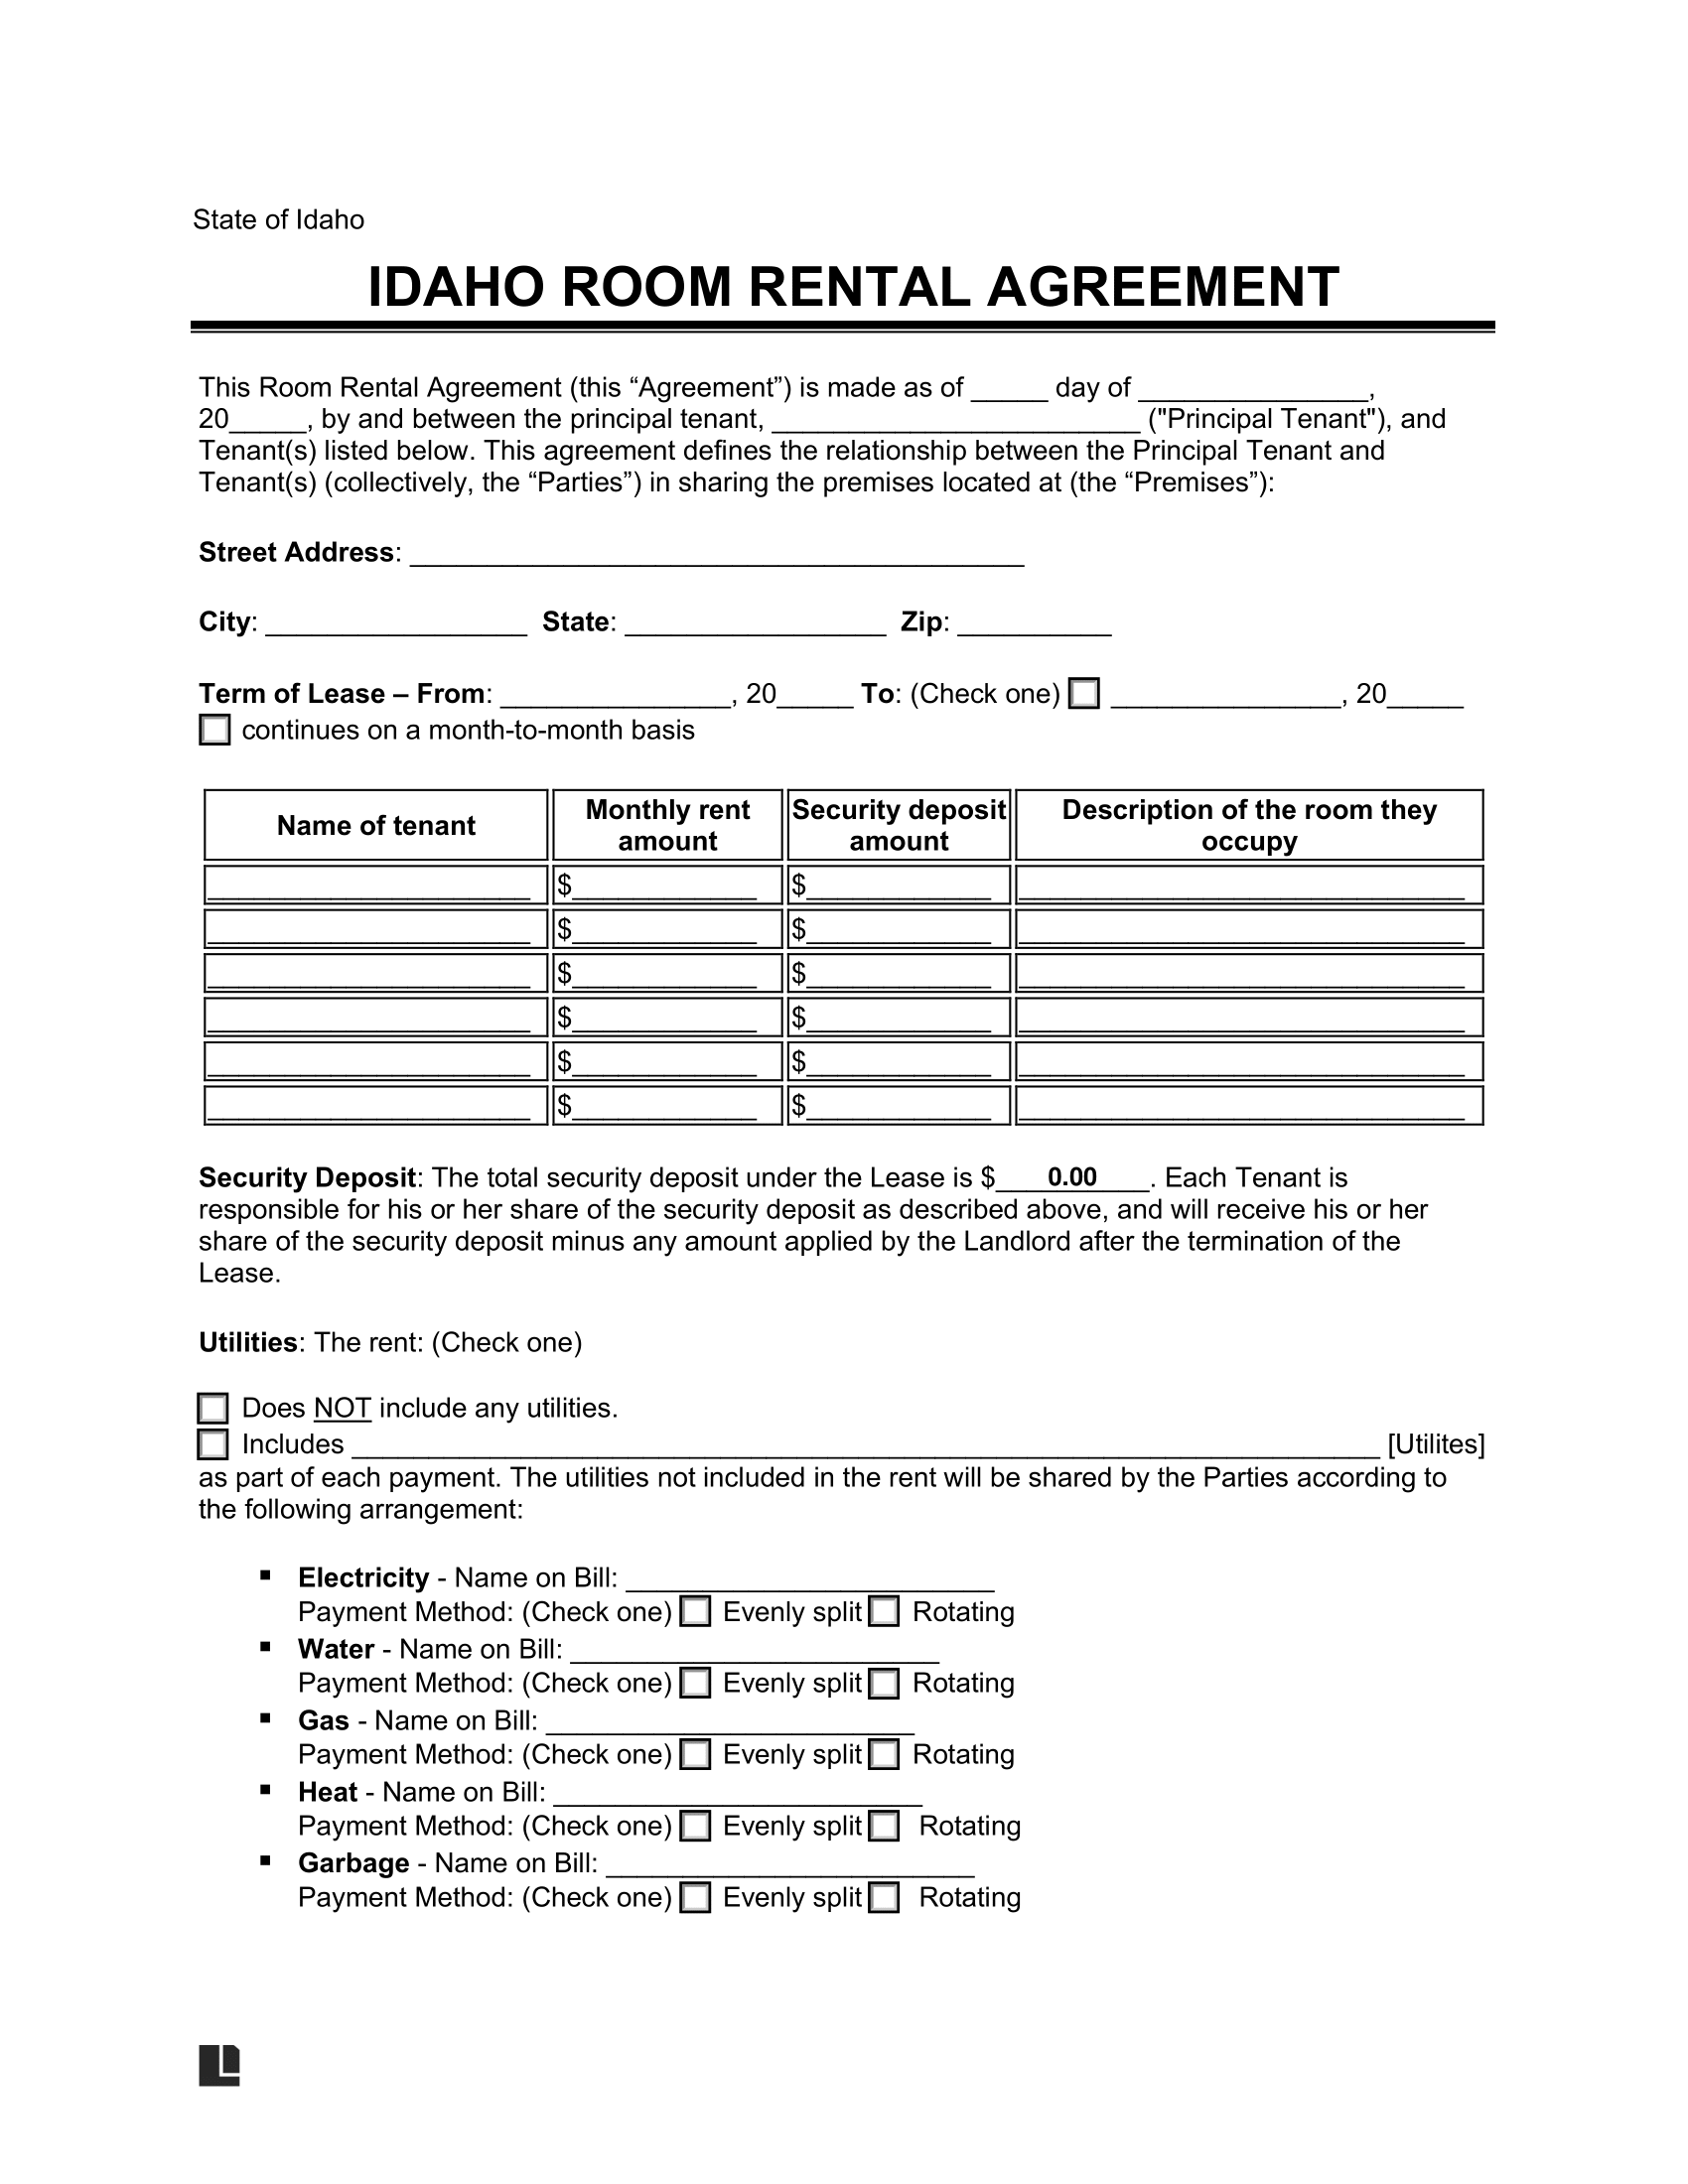 Idaho Room Rental Agreement